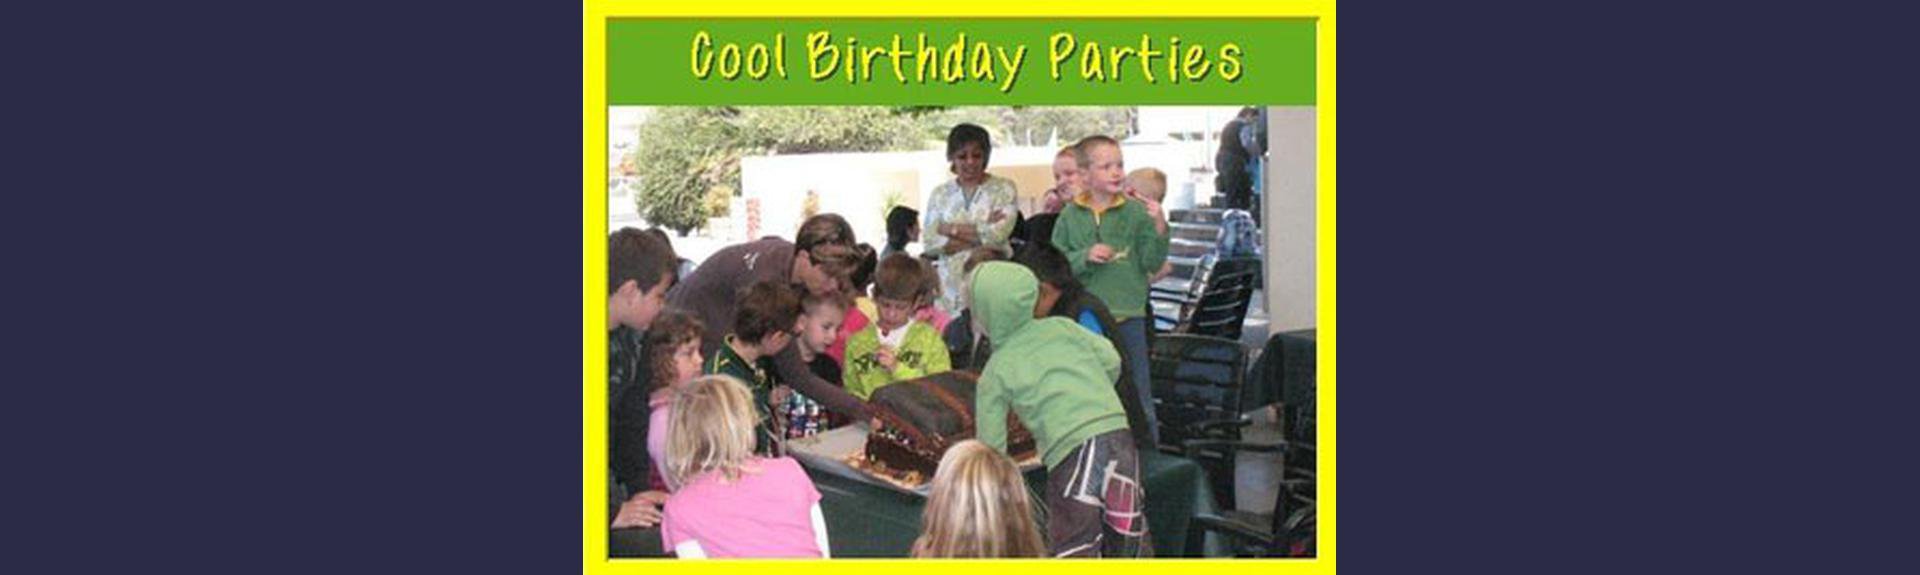 Kids party venues rental ideas Kyalami Johannesburg